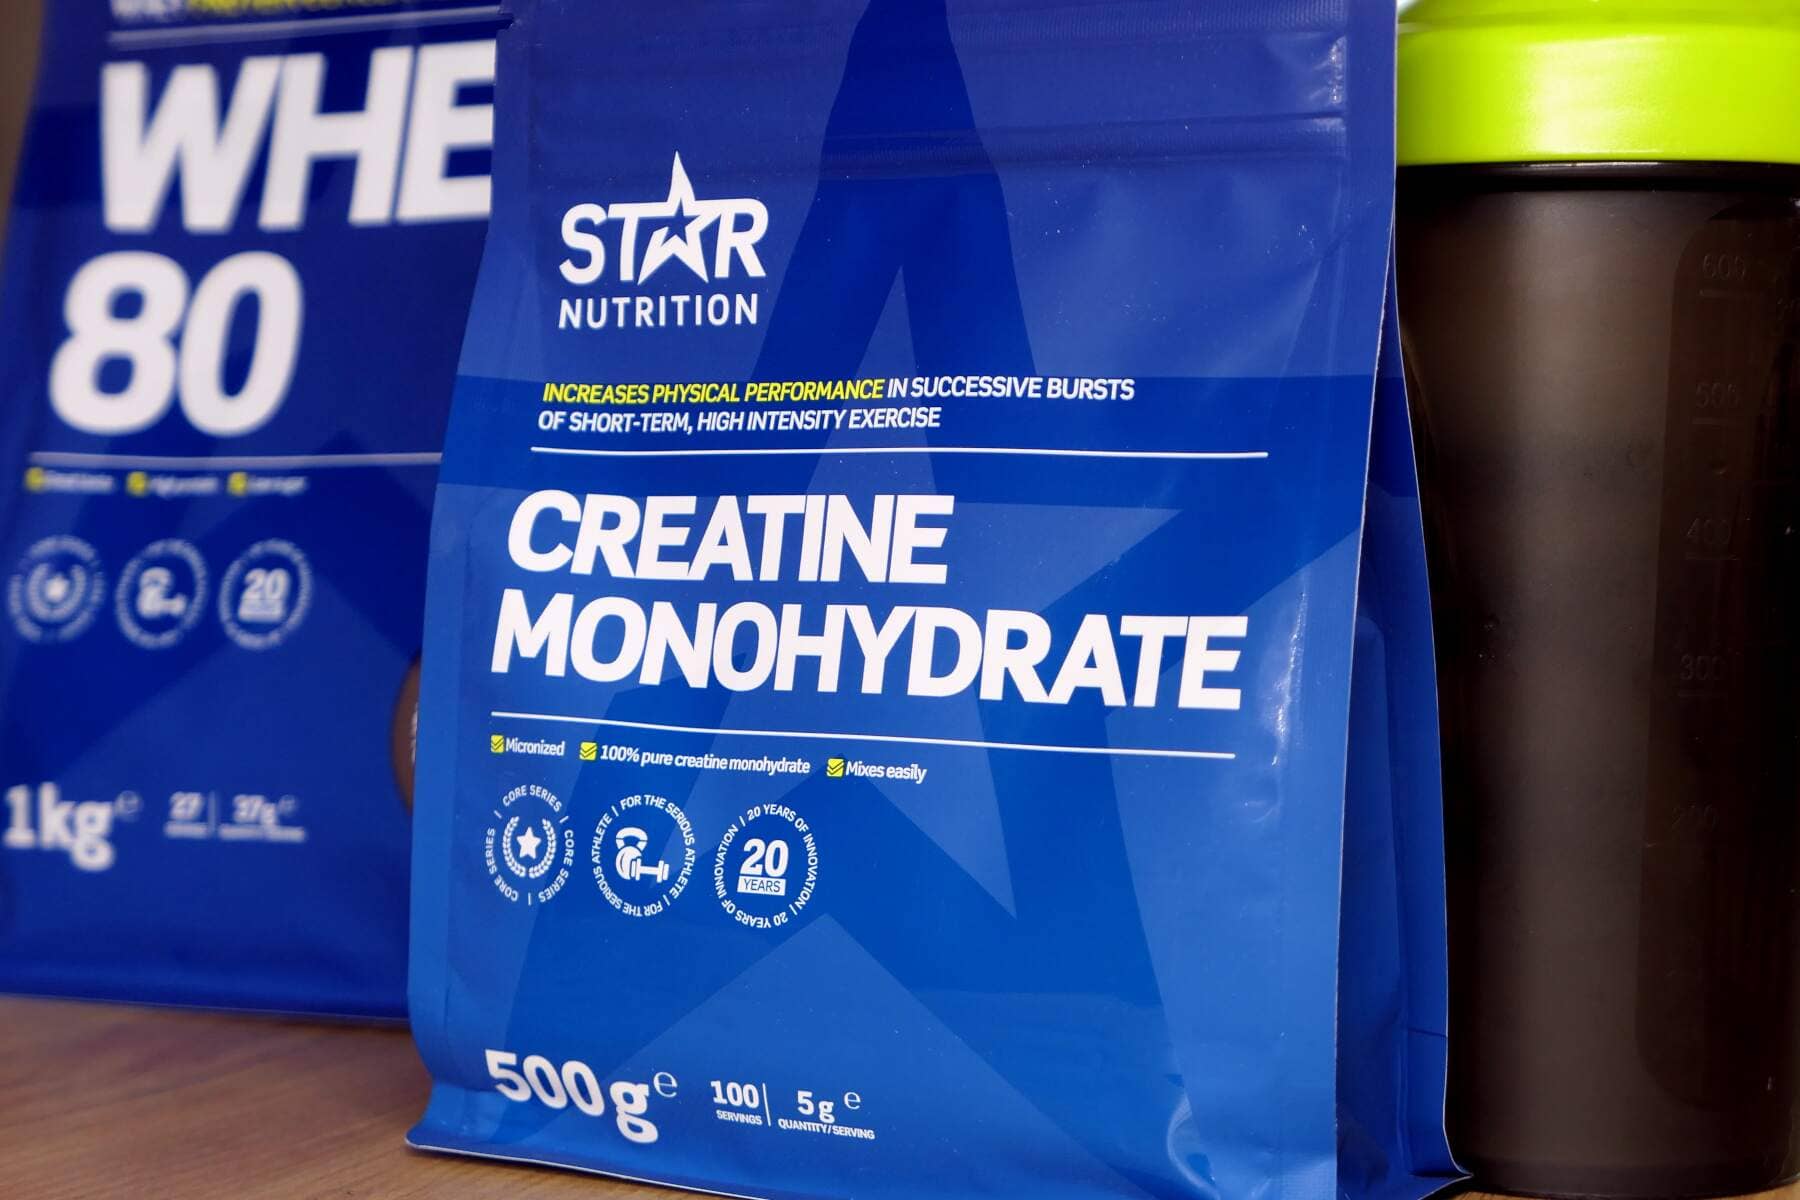 Star nutrition creatine monohydrate